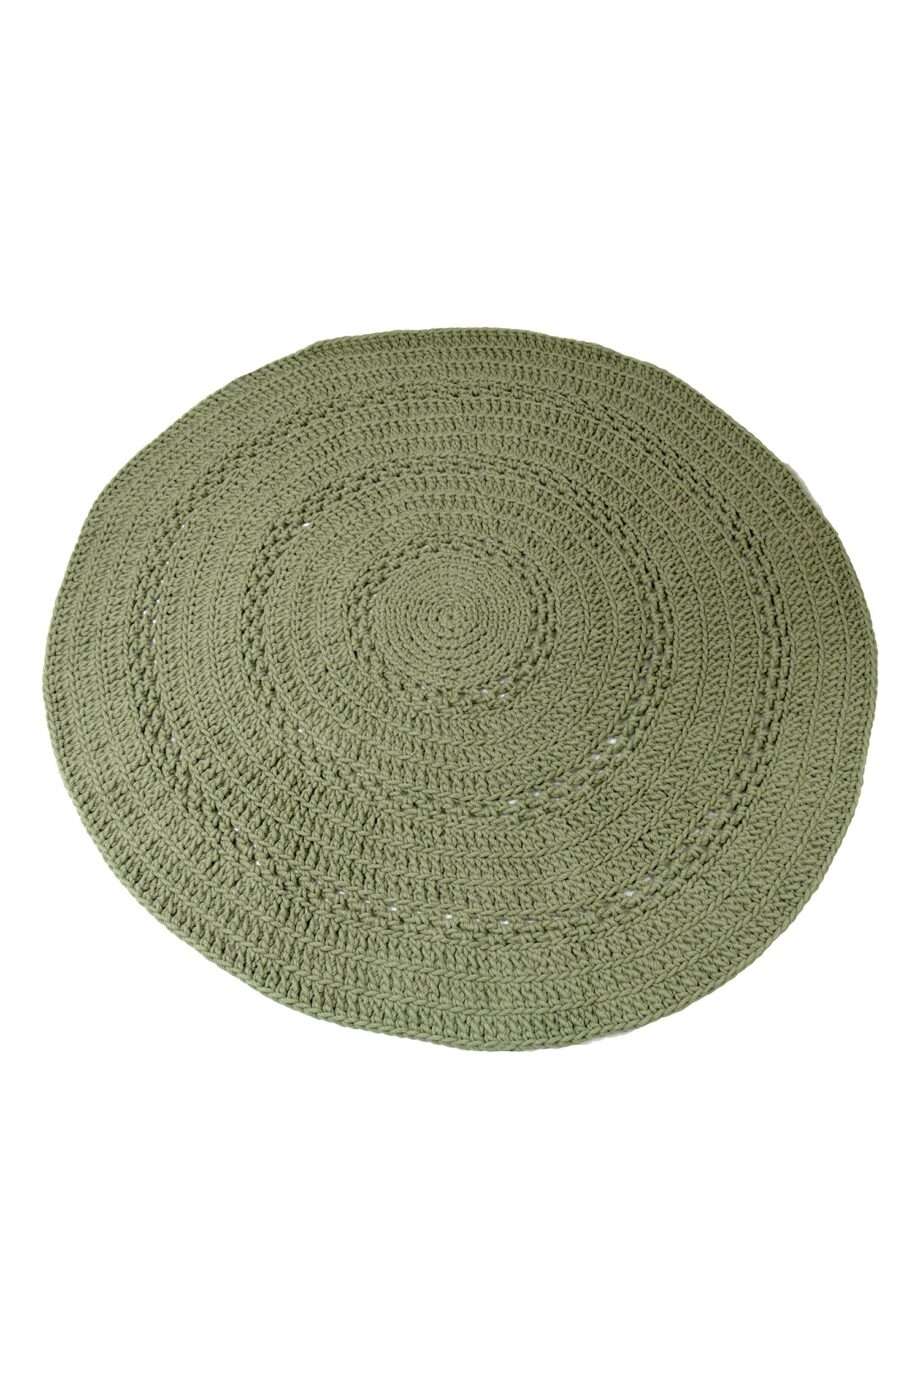 peony olive green crochet woolen rug xlarge